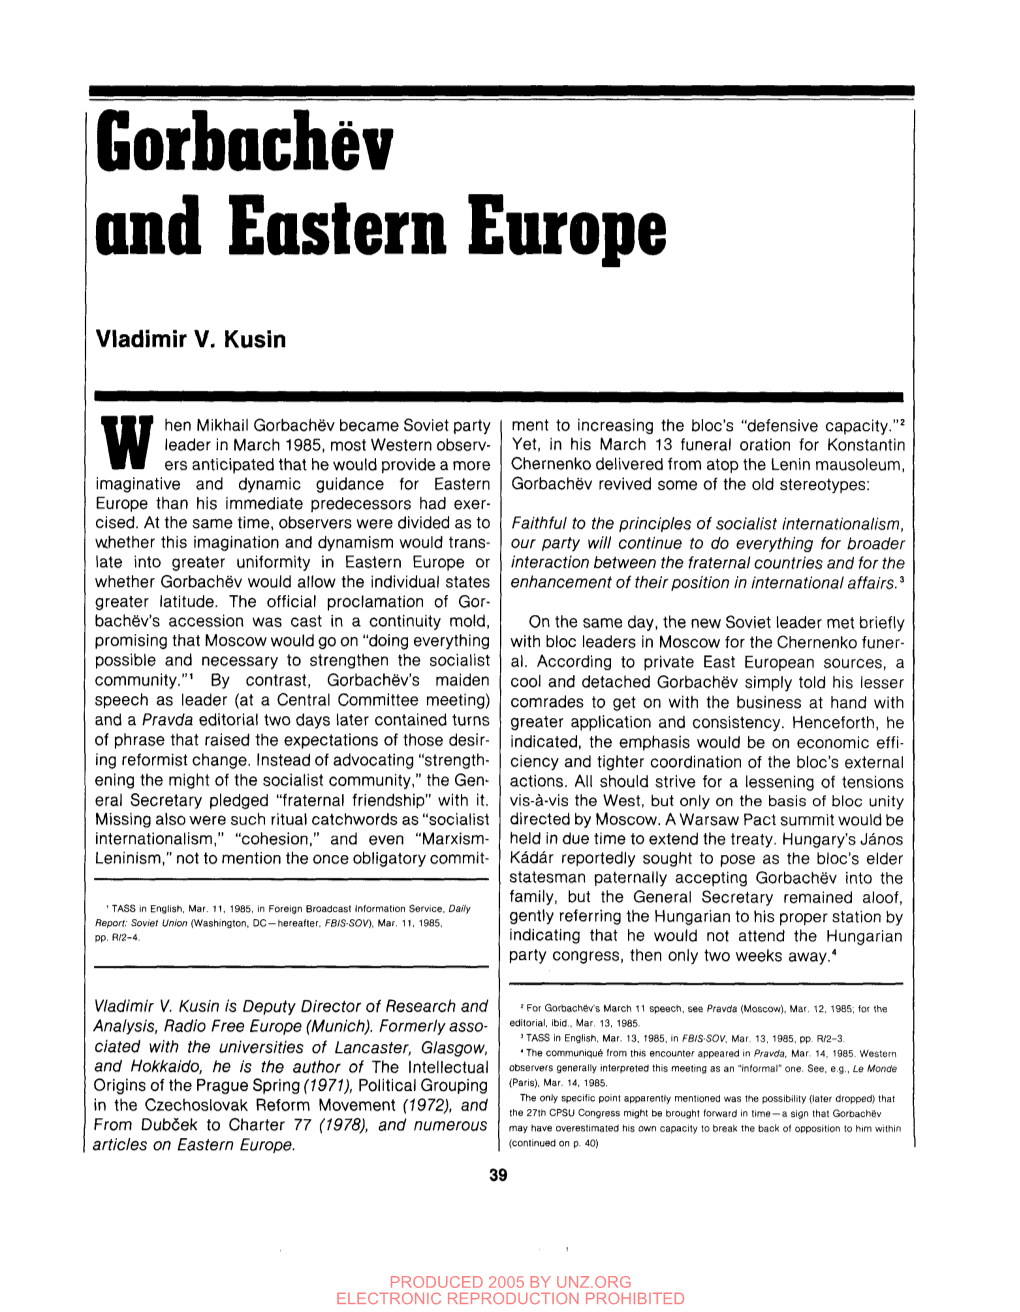 Gorbachev and Eastern Europe